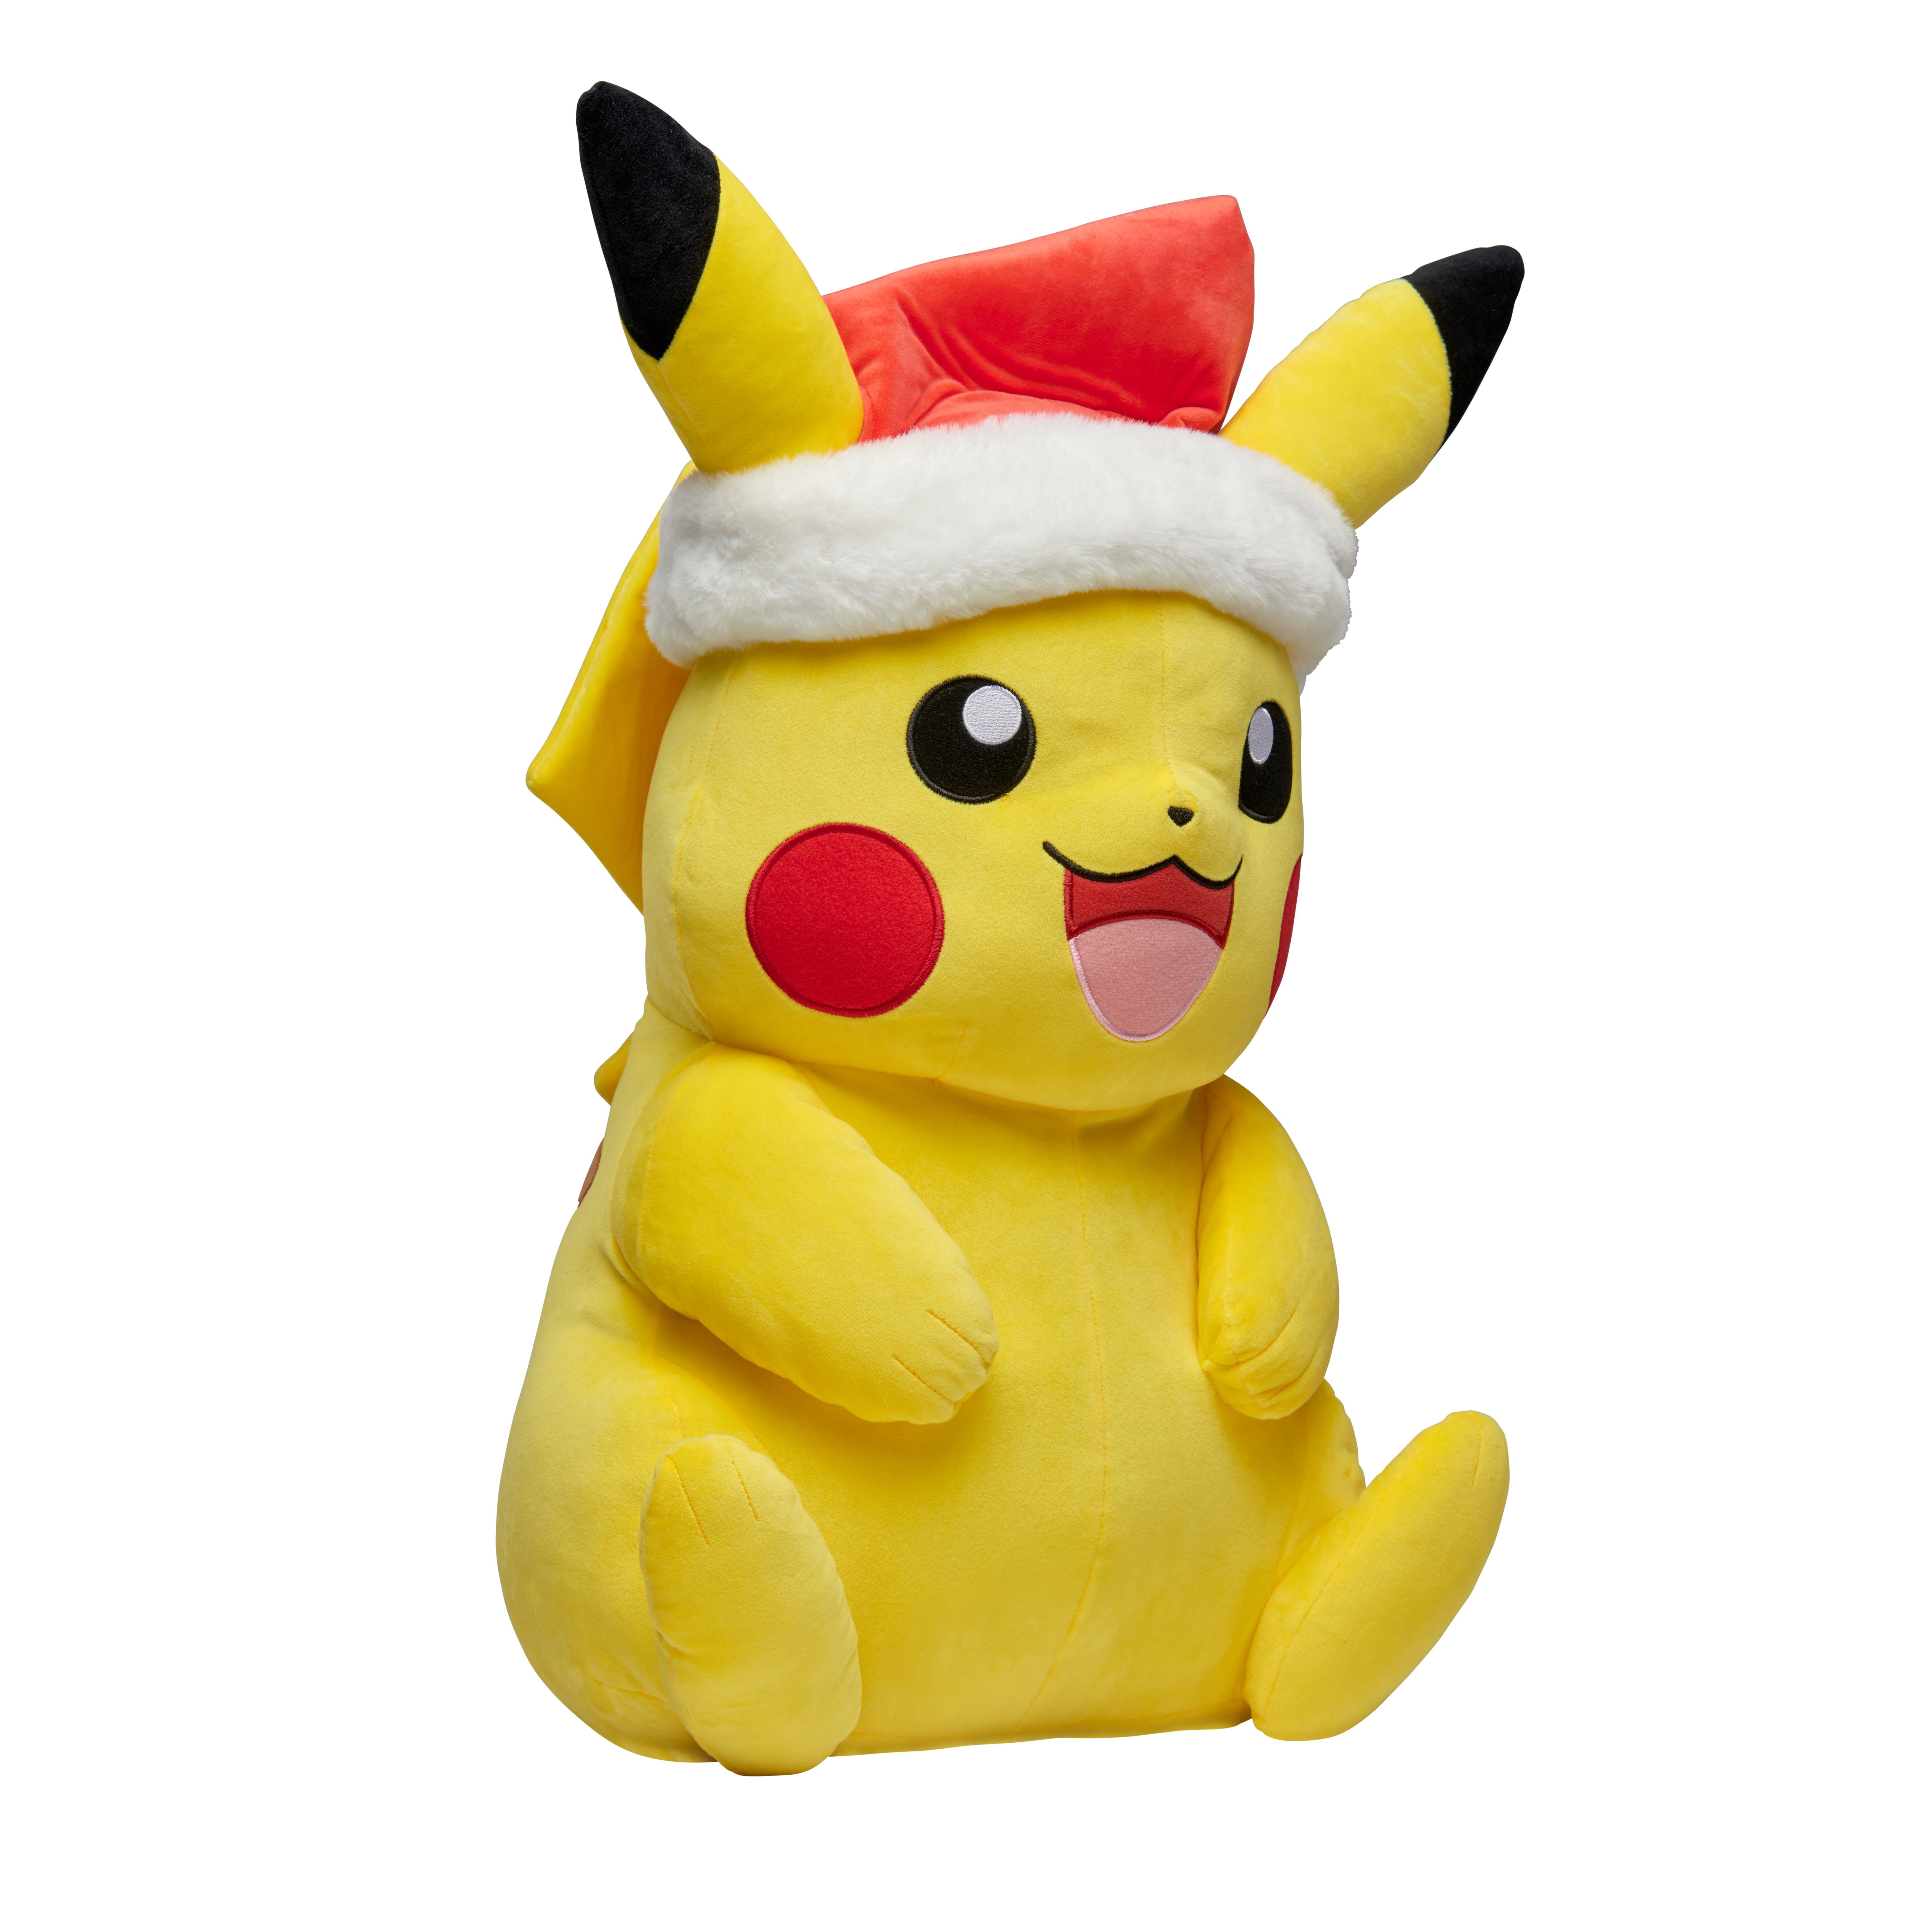 Pokemon Pikachu Plush - 24-inch Child's Plush with Authentic